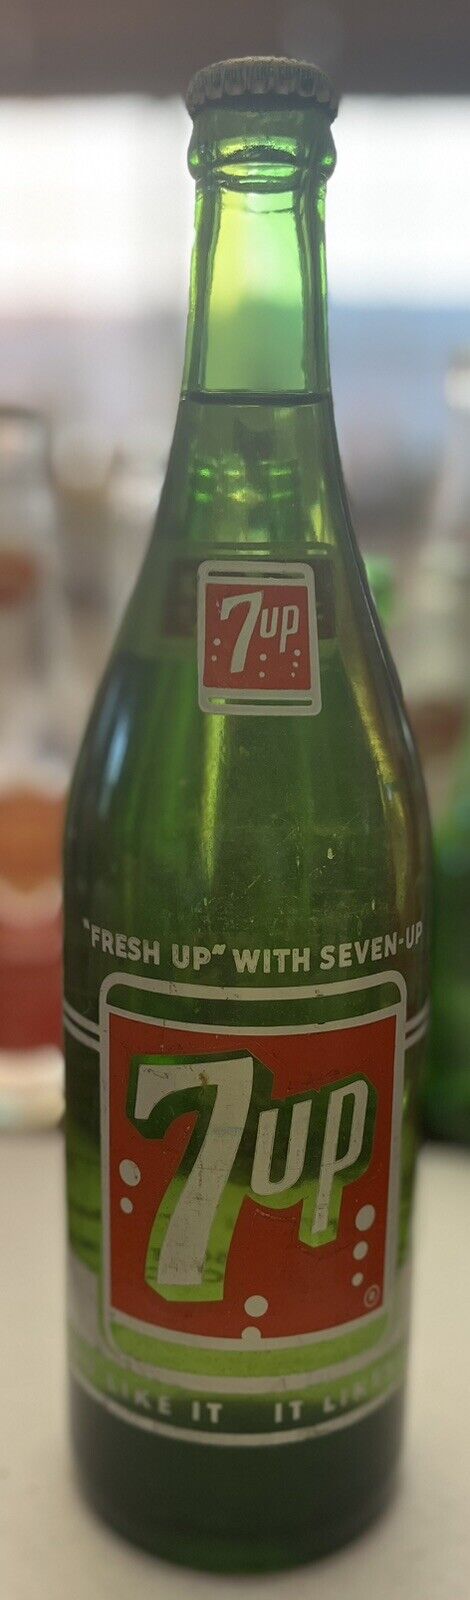 Vintage 7 UP Bottle 1950s Green Glass “Freshen Up” w Seven Up 24 Oz. FULL